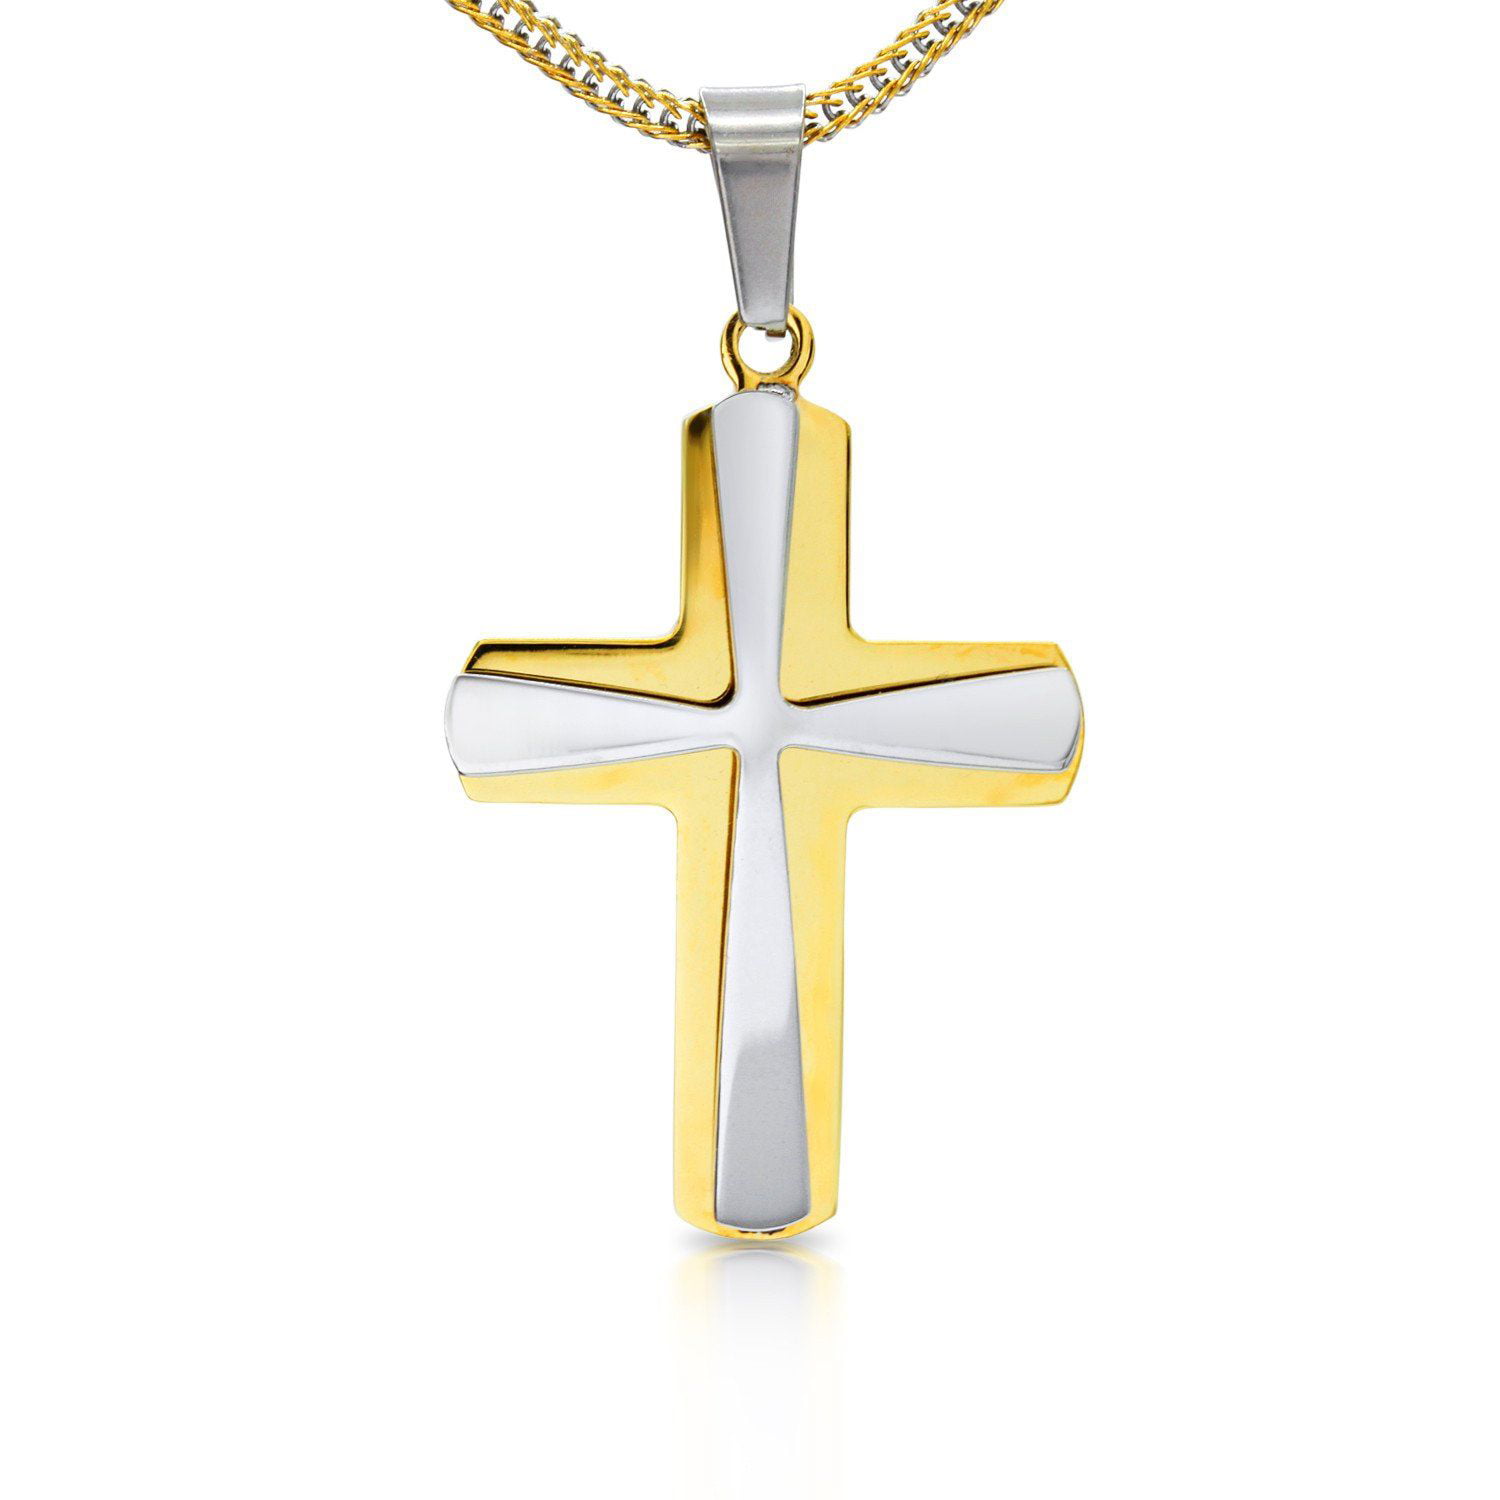 BEBERLINI Cross Pendant Stainless Steel Double Layer Male Prayer Cross Bead Charm Fashion Jewelry (Gold/Silver)